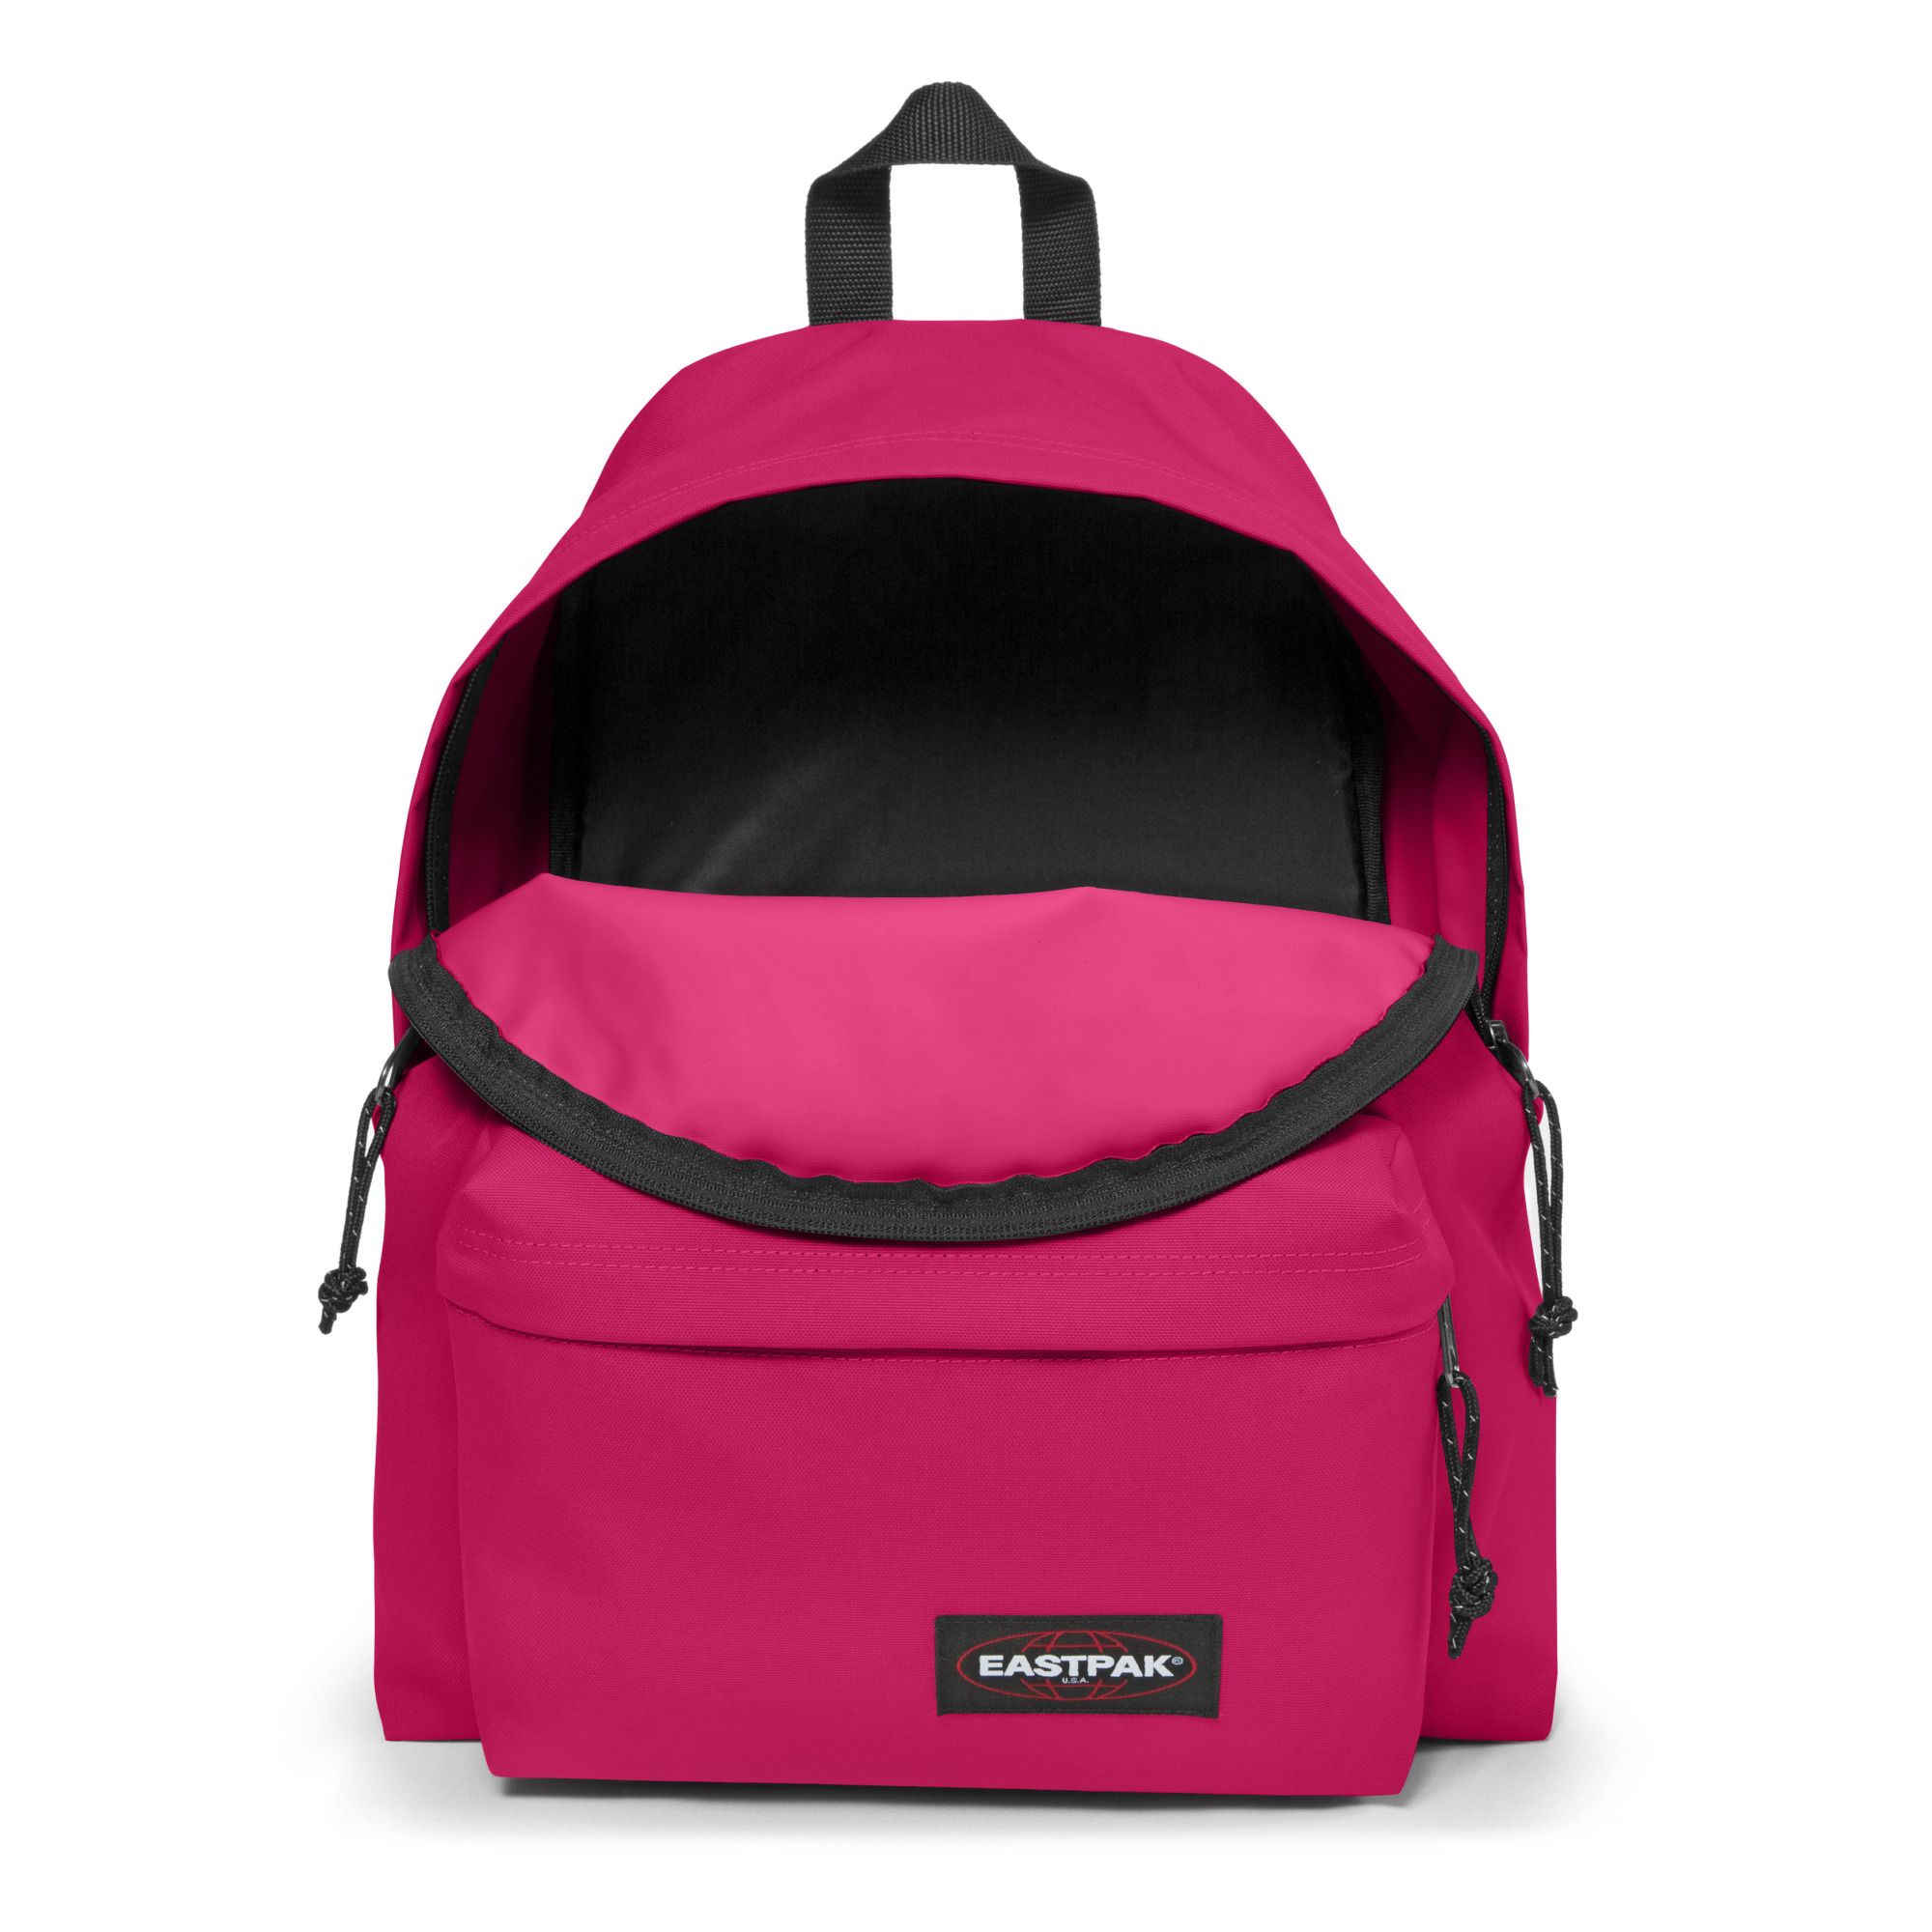 Backpack Pink Eastpak Fashion Teen , Children